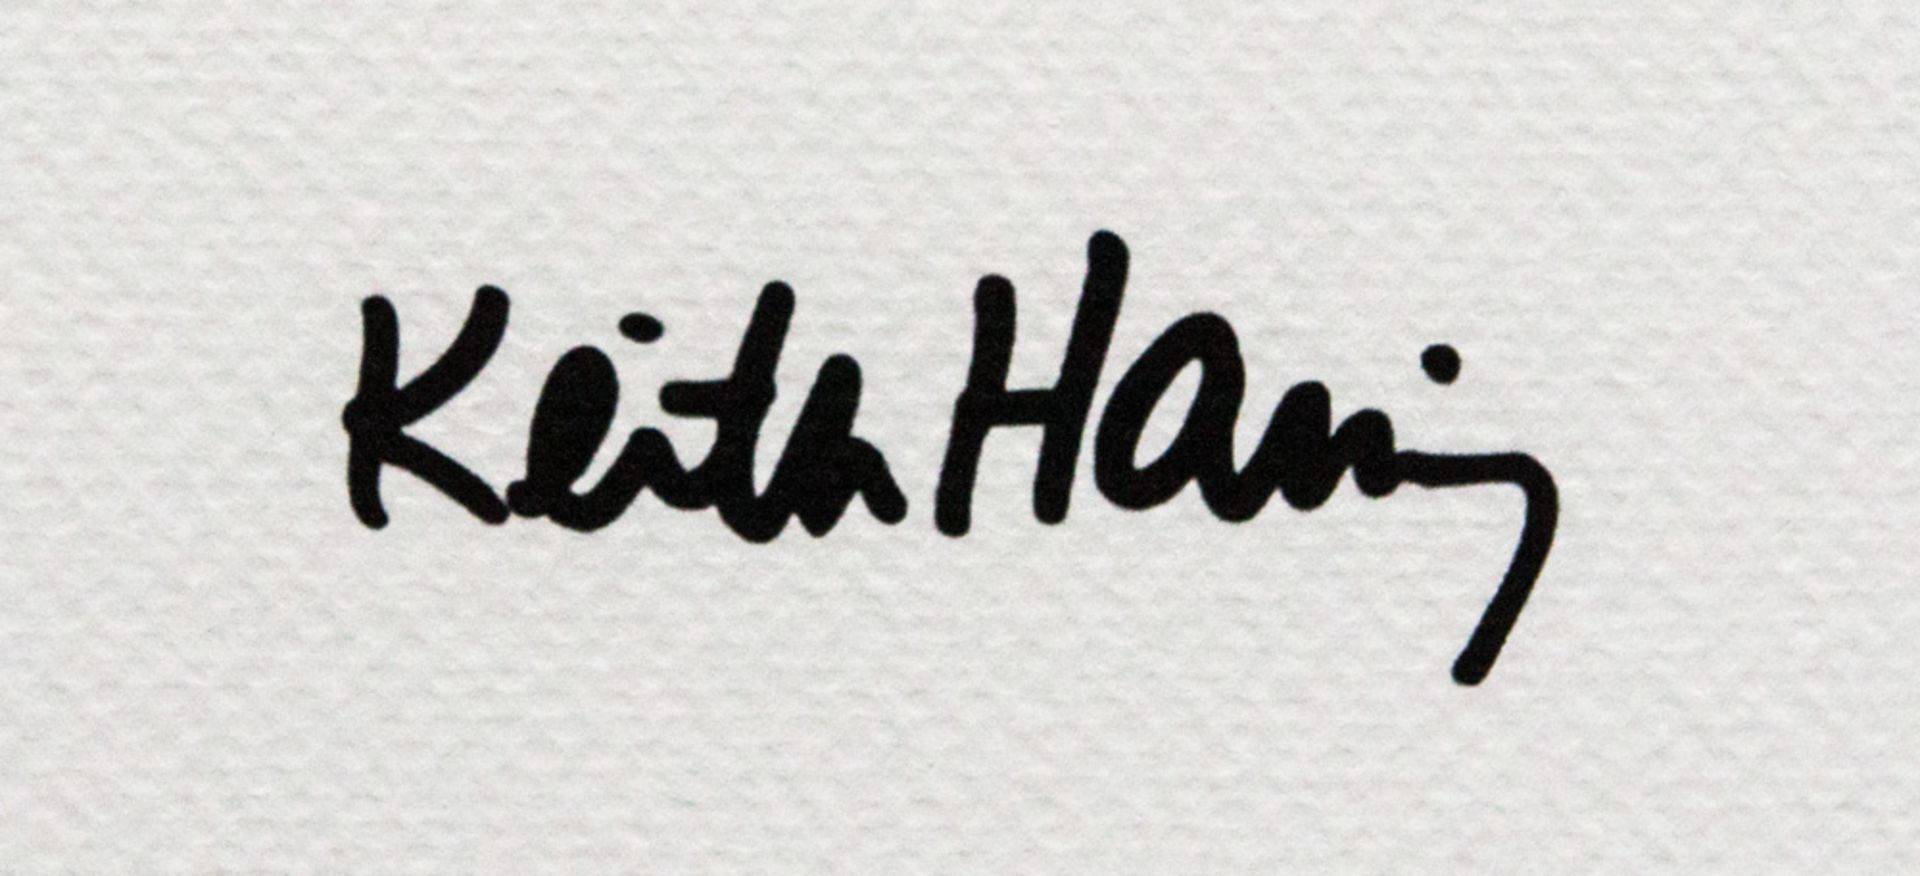 Keith Haring 'Dog' - Image 3 of 6